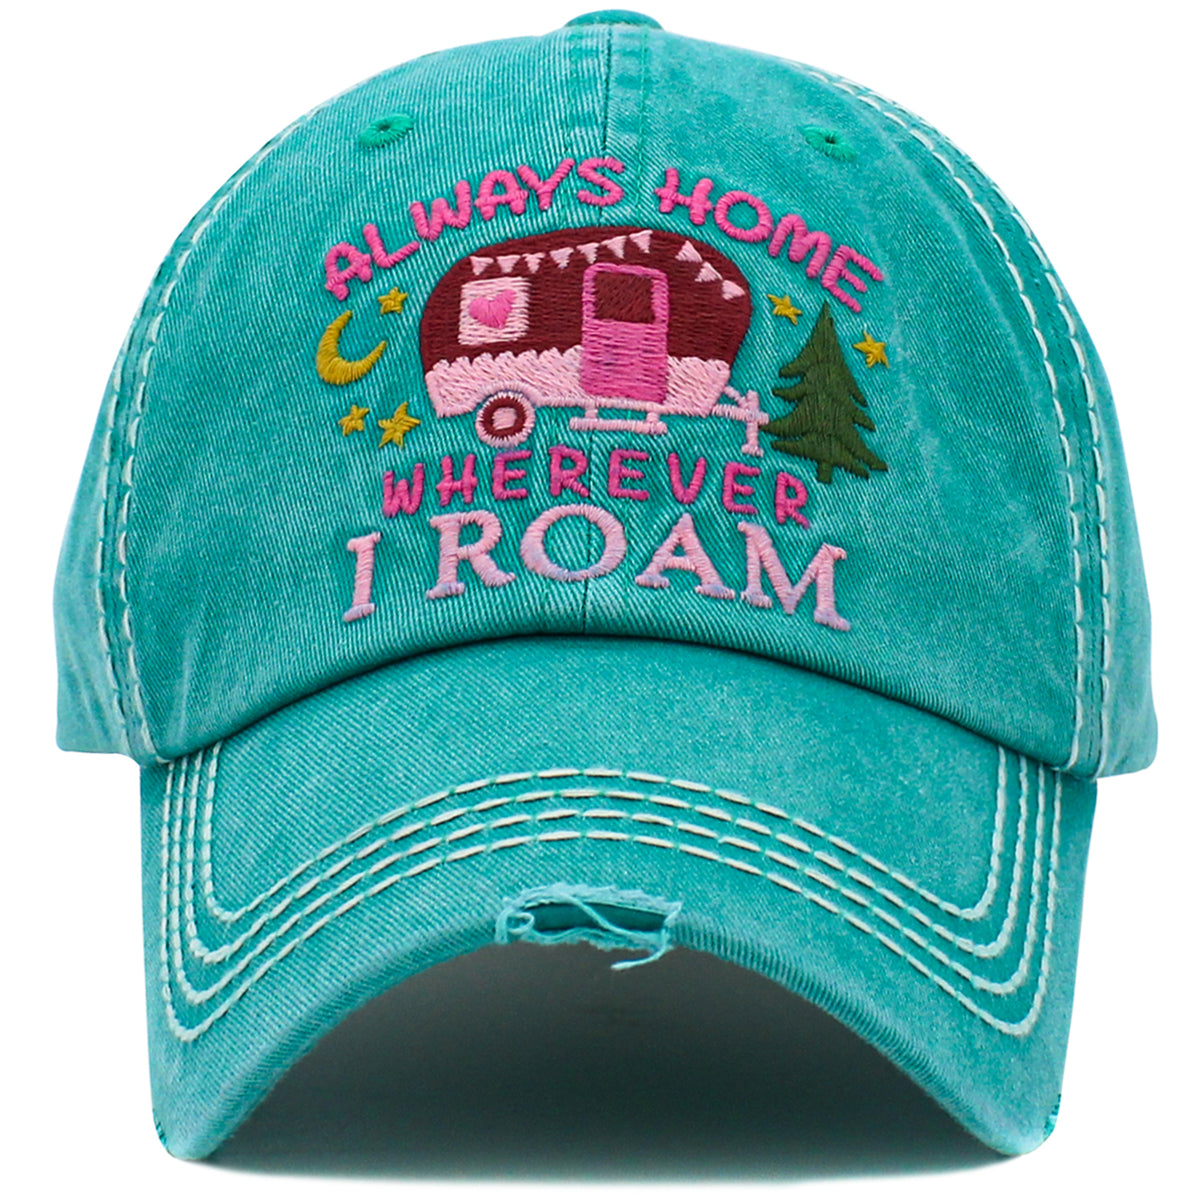 1510 - Always Home Wherever I Roam Hat - Turquoise